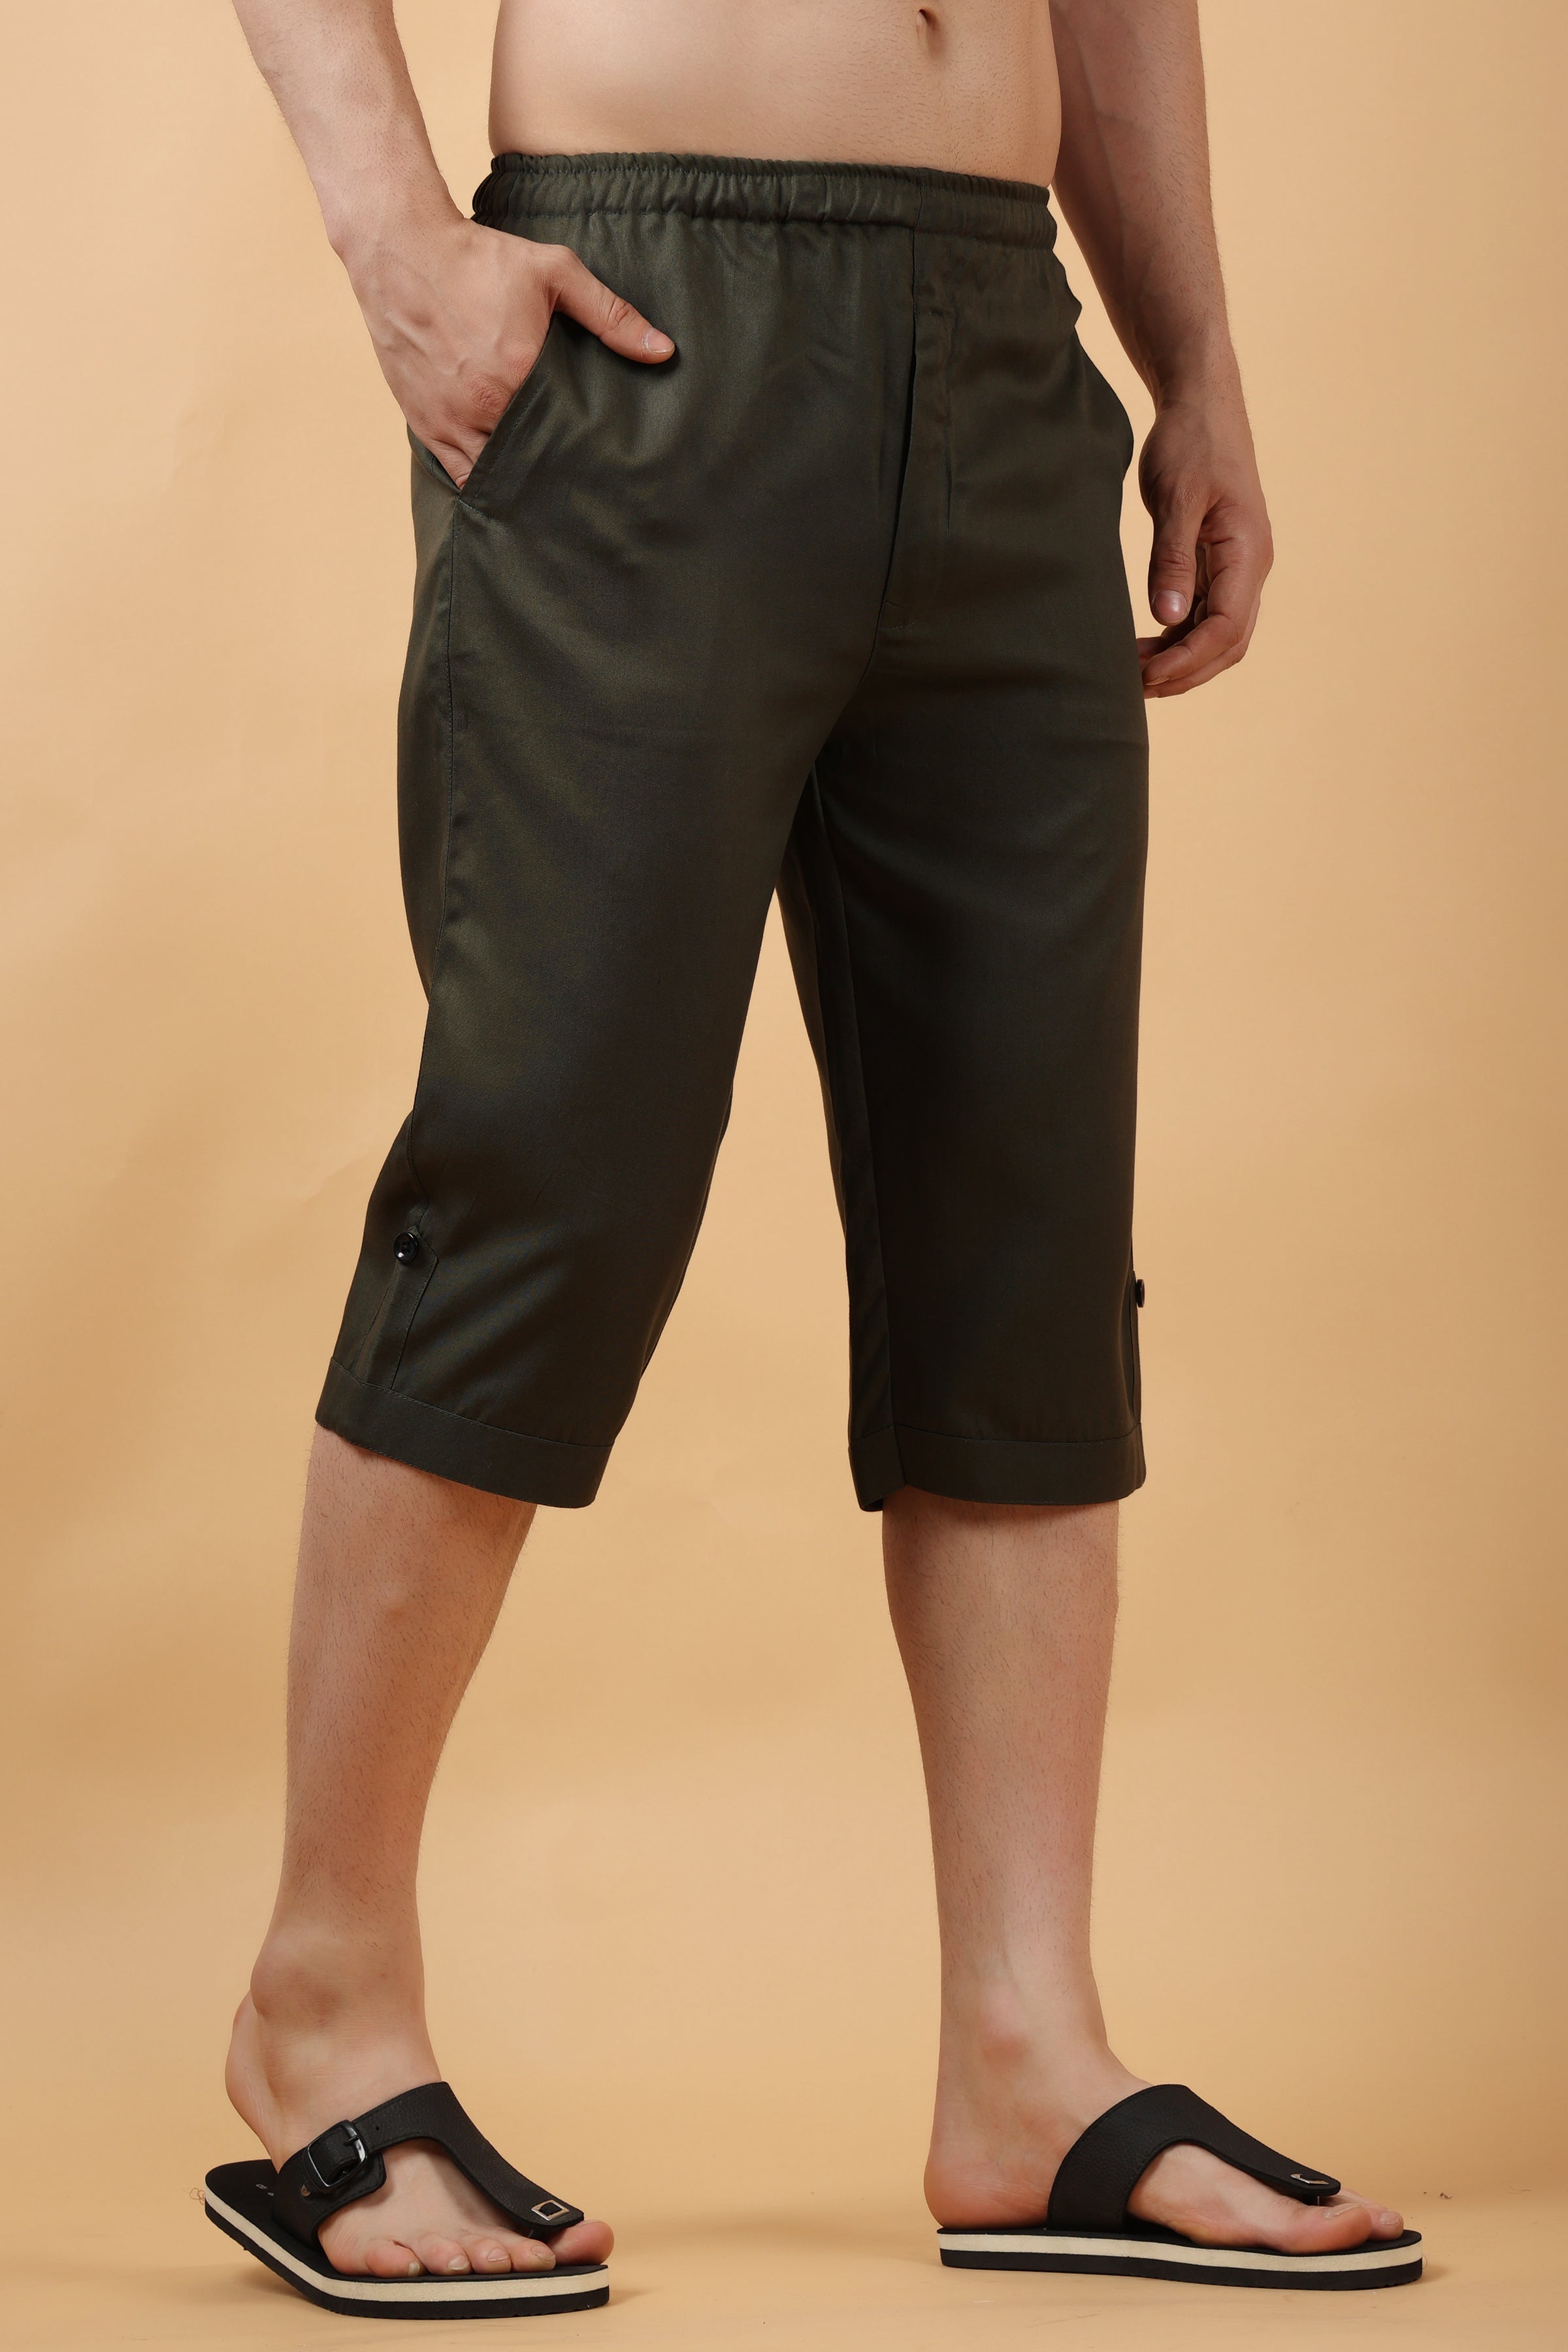 Buy Yayun Mens Summer Capri Pants Casual Work Pants Outdoor Sports Trousers  Gery 2XL at Amazonin